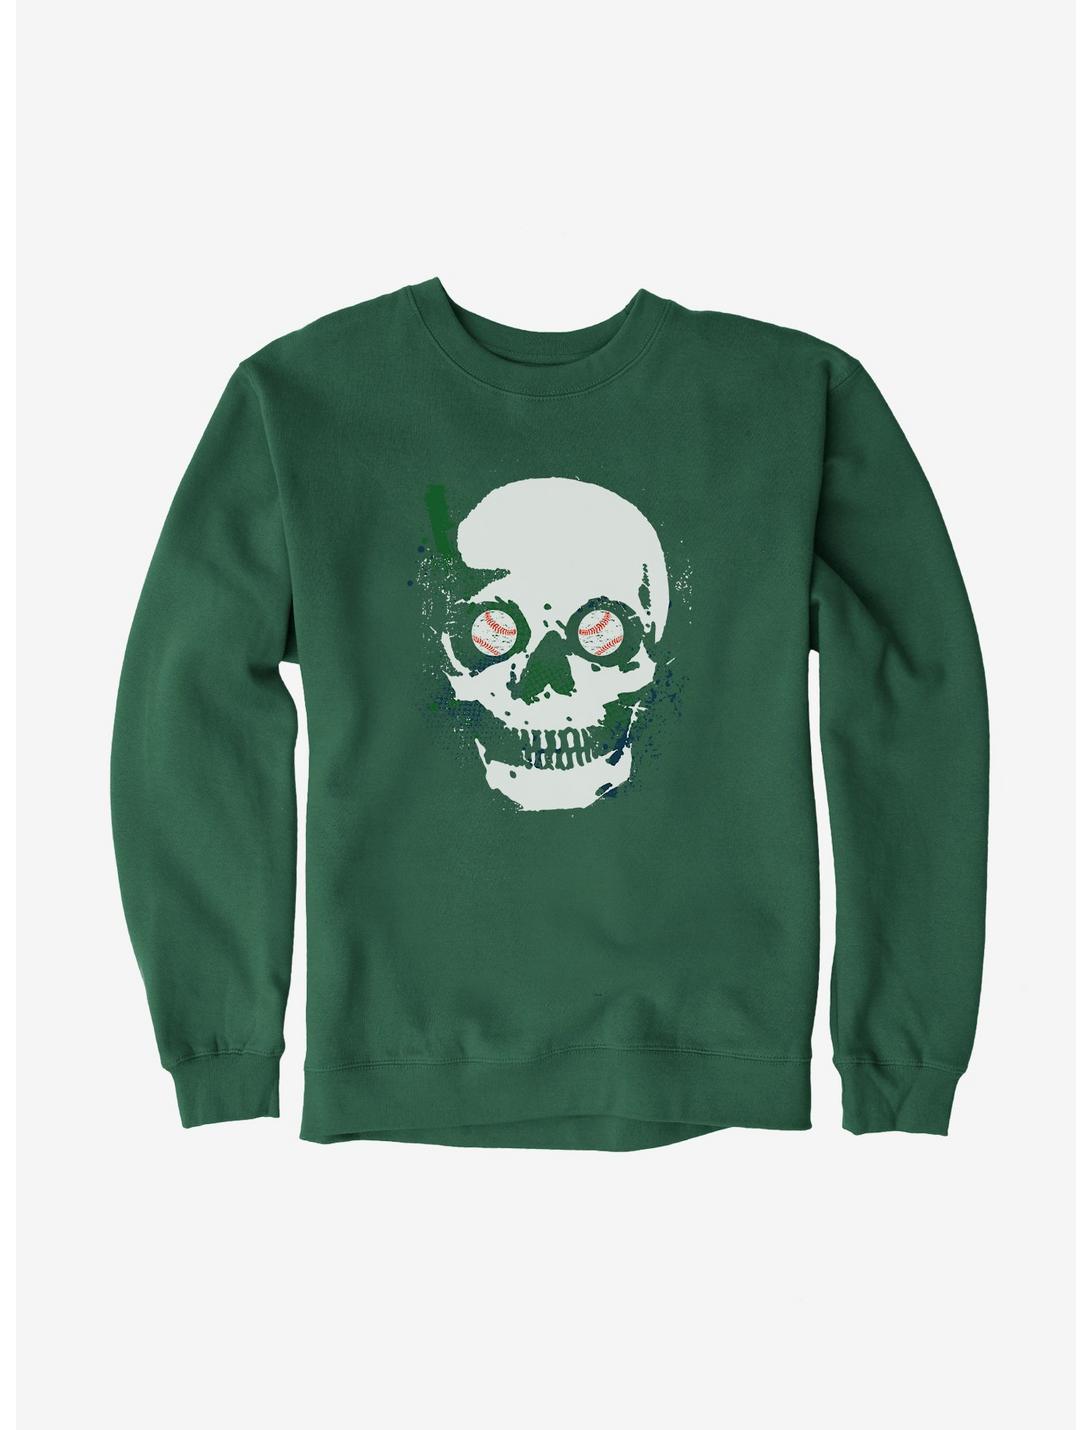 iCreate Baseball Skull Sweatshirt, , hi-res